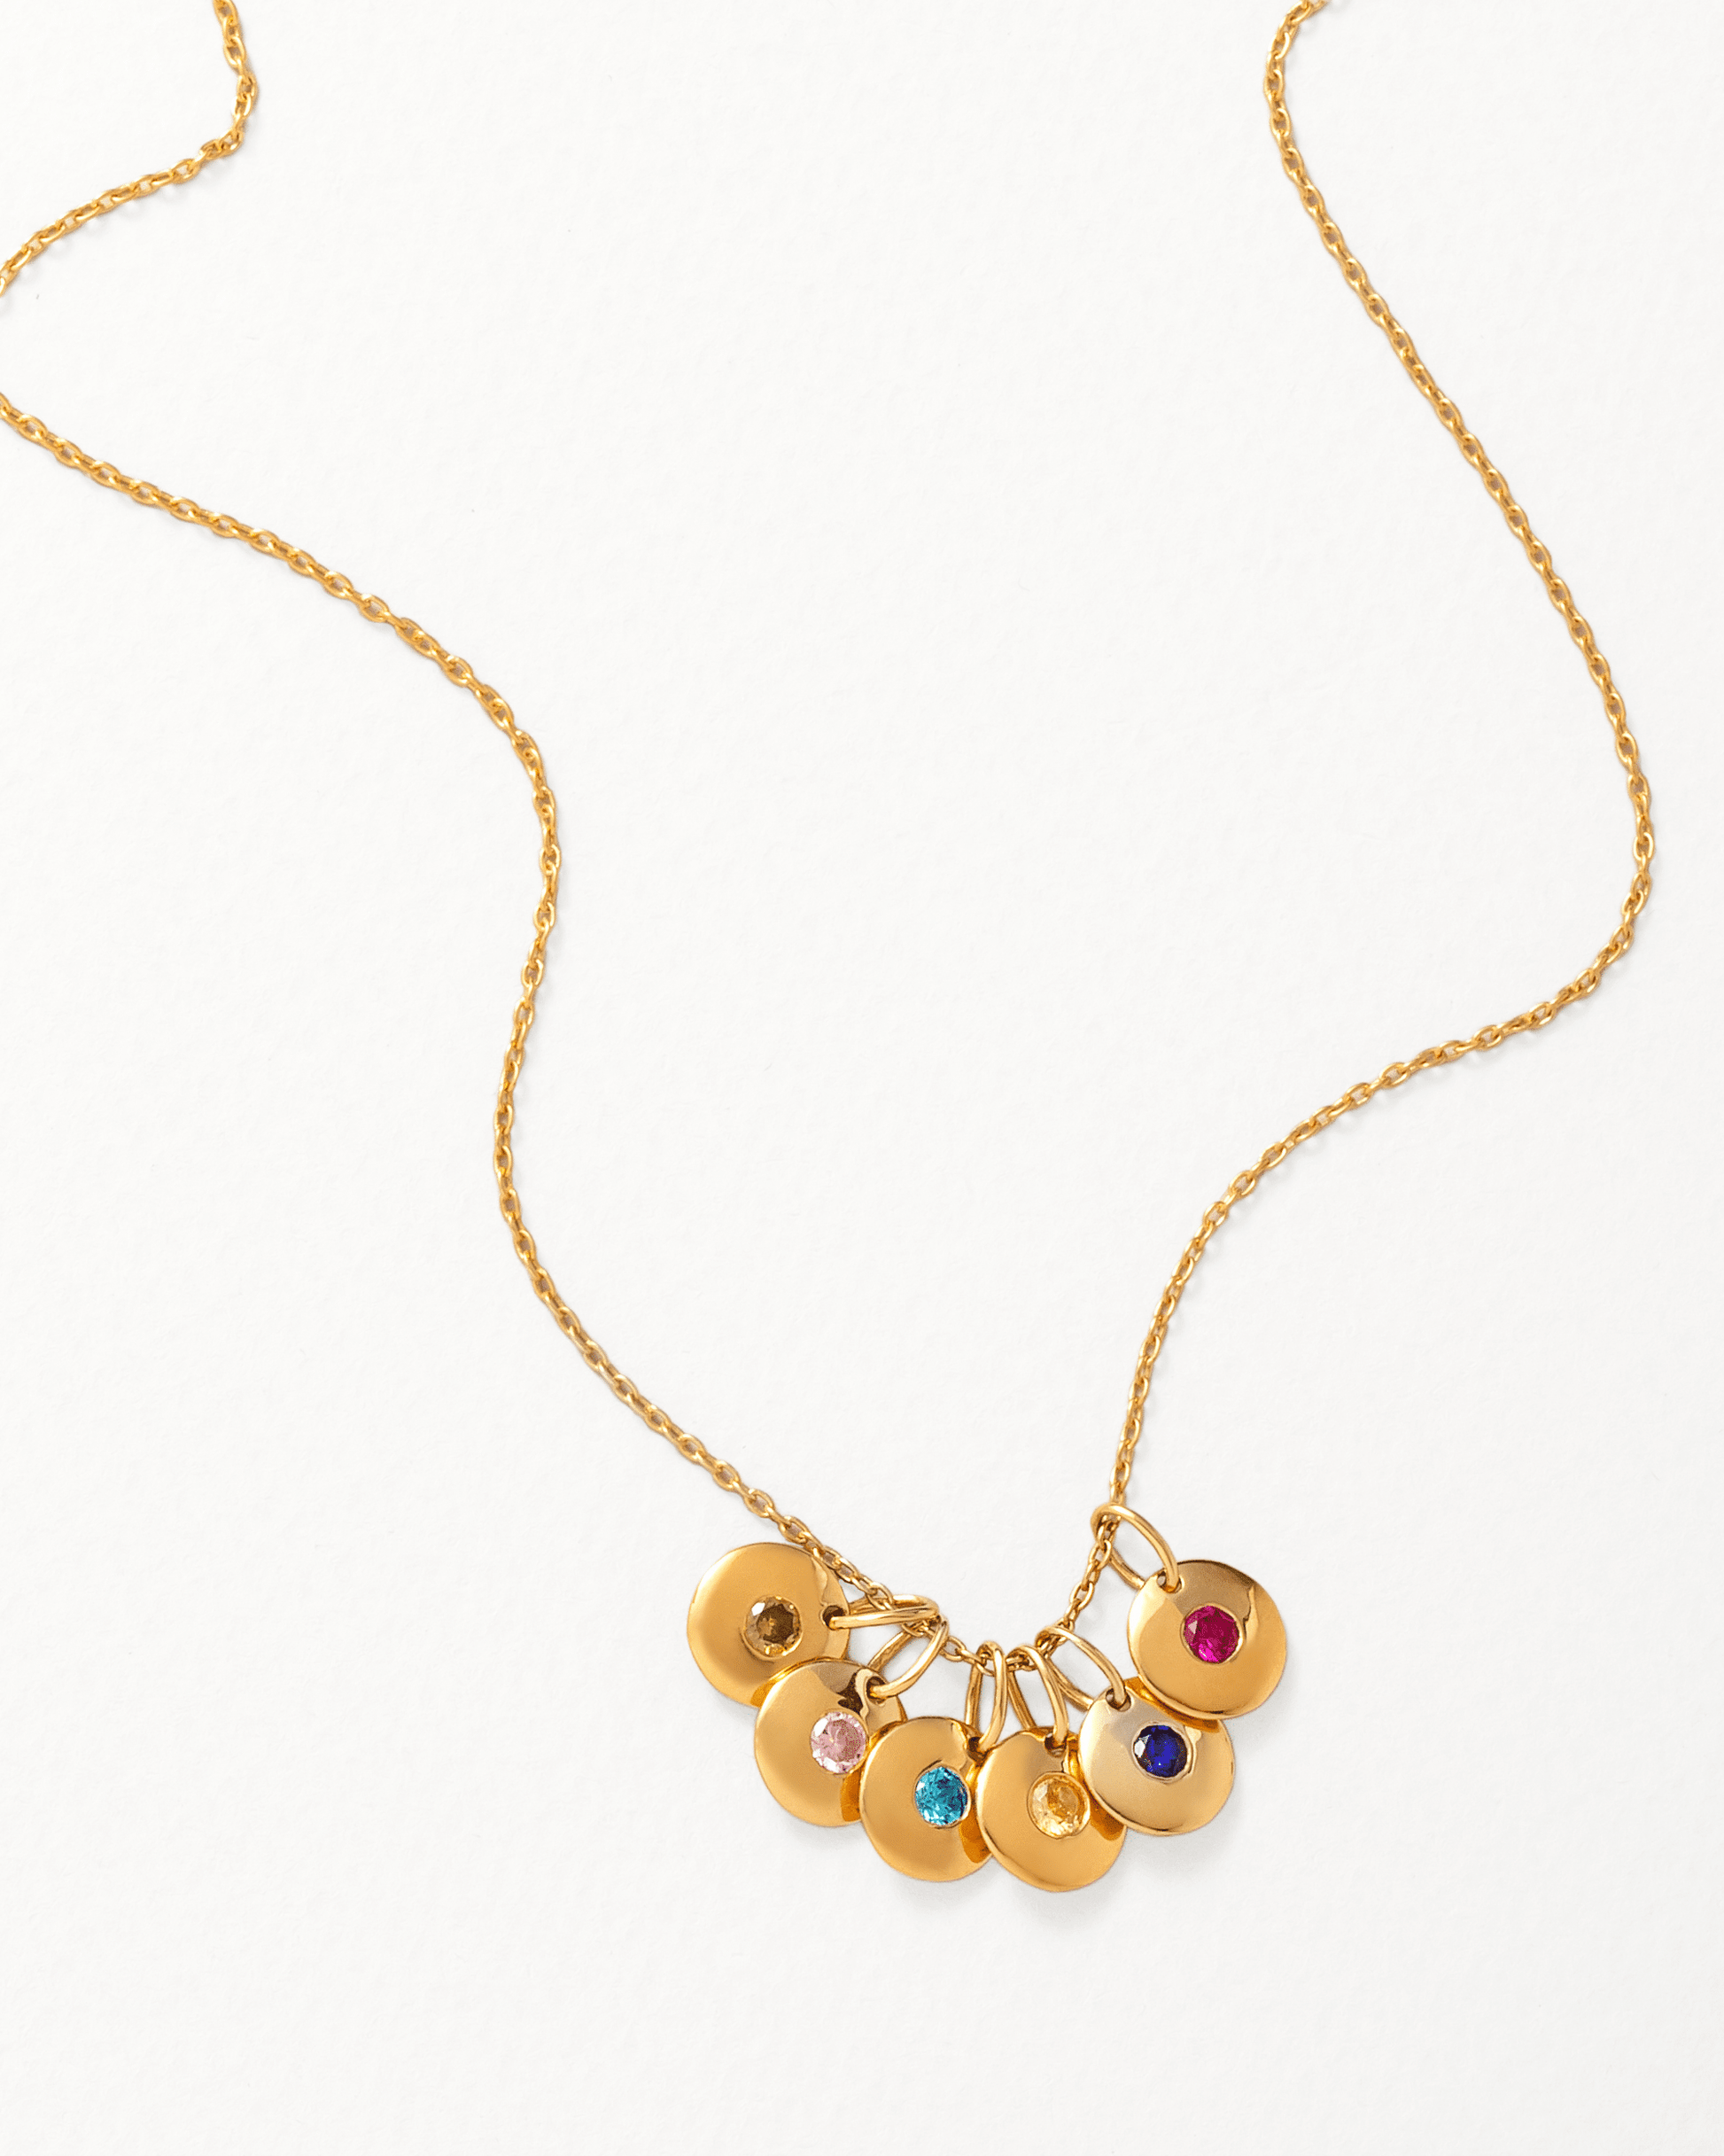 Birthstone Charm Necklace - 18K Gold Vermeil Necklaces magal-dev 